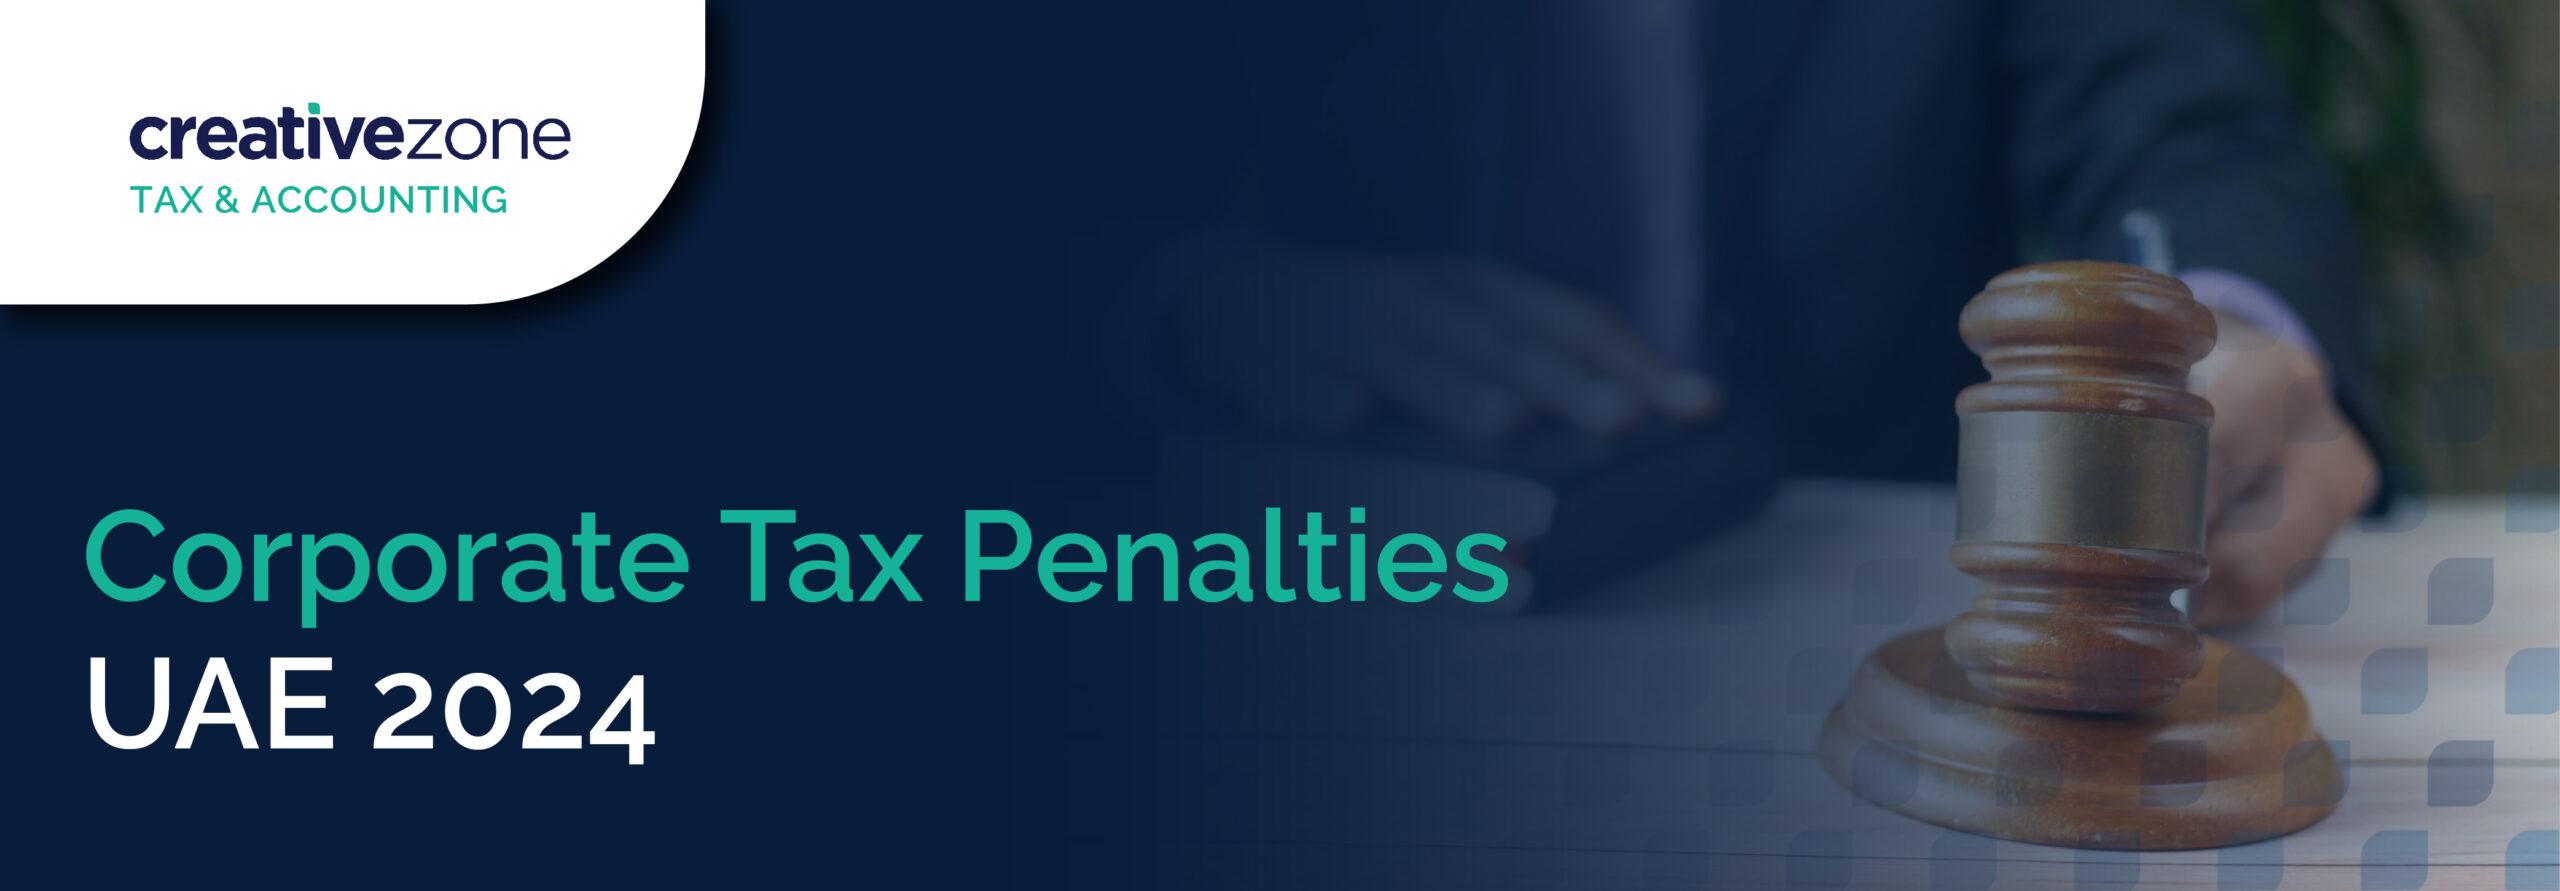 Corporate Tax Penalties UAE 2024